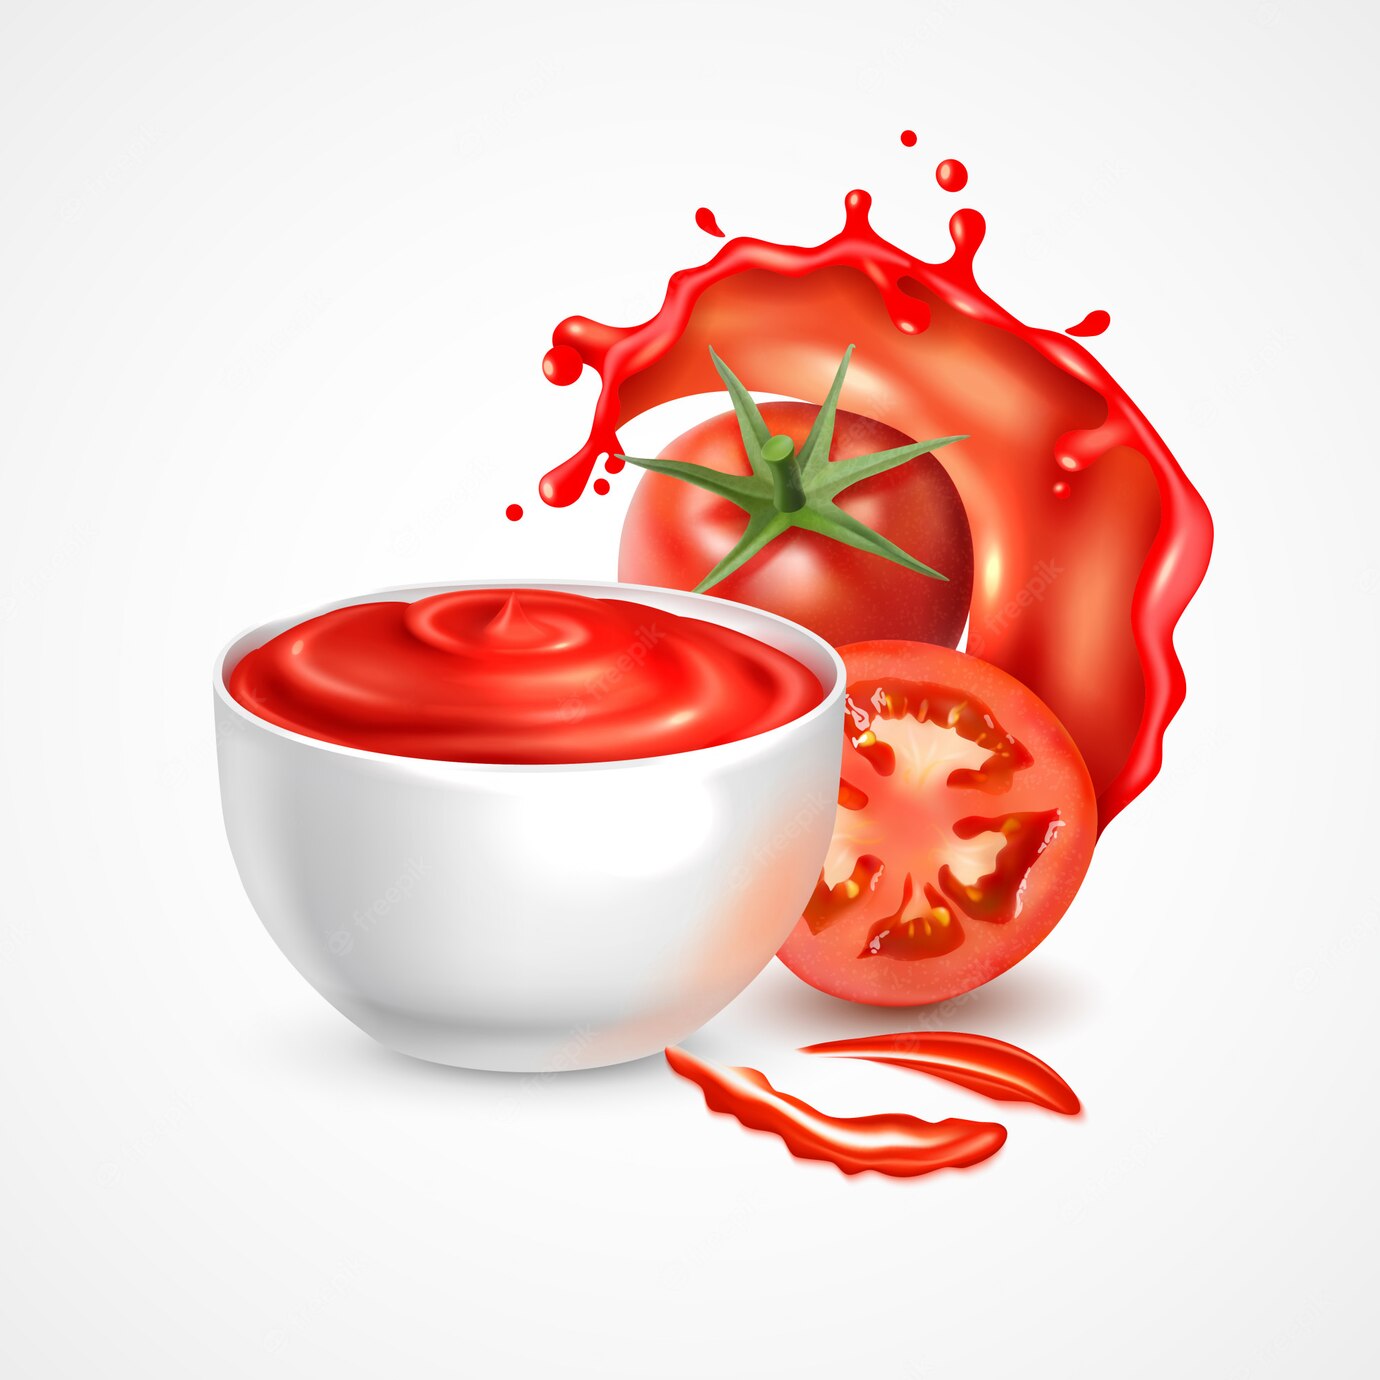 Tomato Sauce Bowl Realistic Composition With Fresh Whole Vegetable Slice Splash Juice 1284 31936